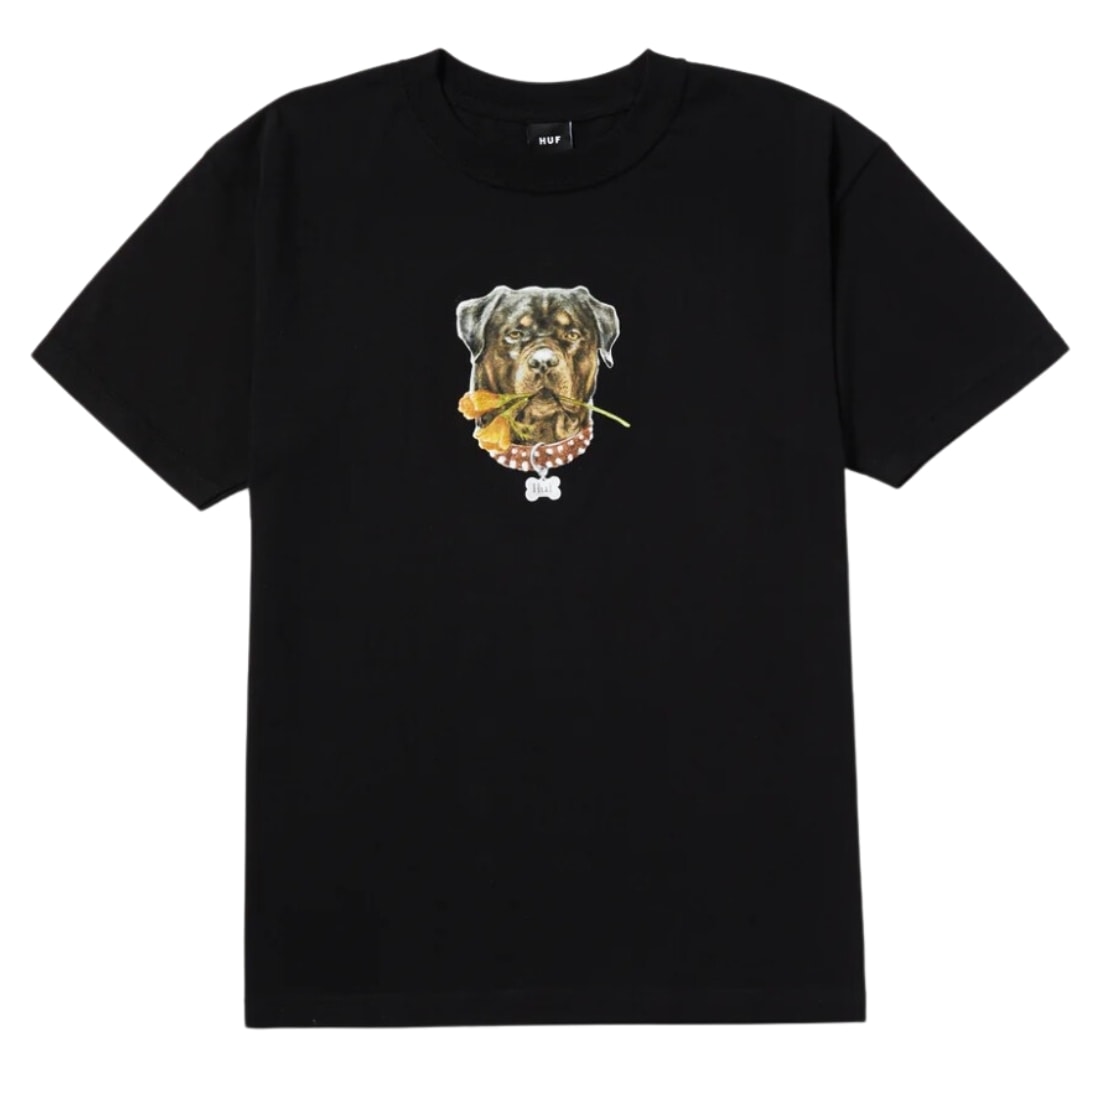 Huf Big Poppy T-Shirt - Black - Mens Skate Brand T-Shirt by Huf